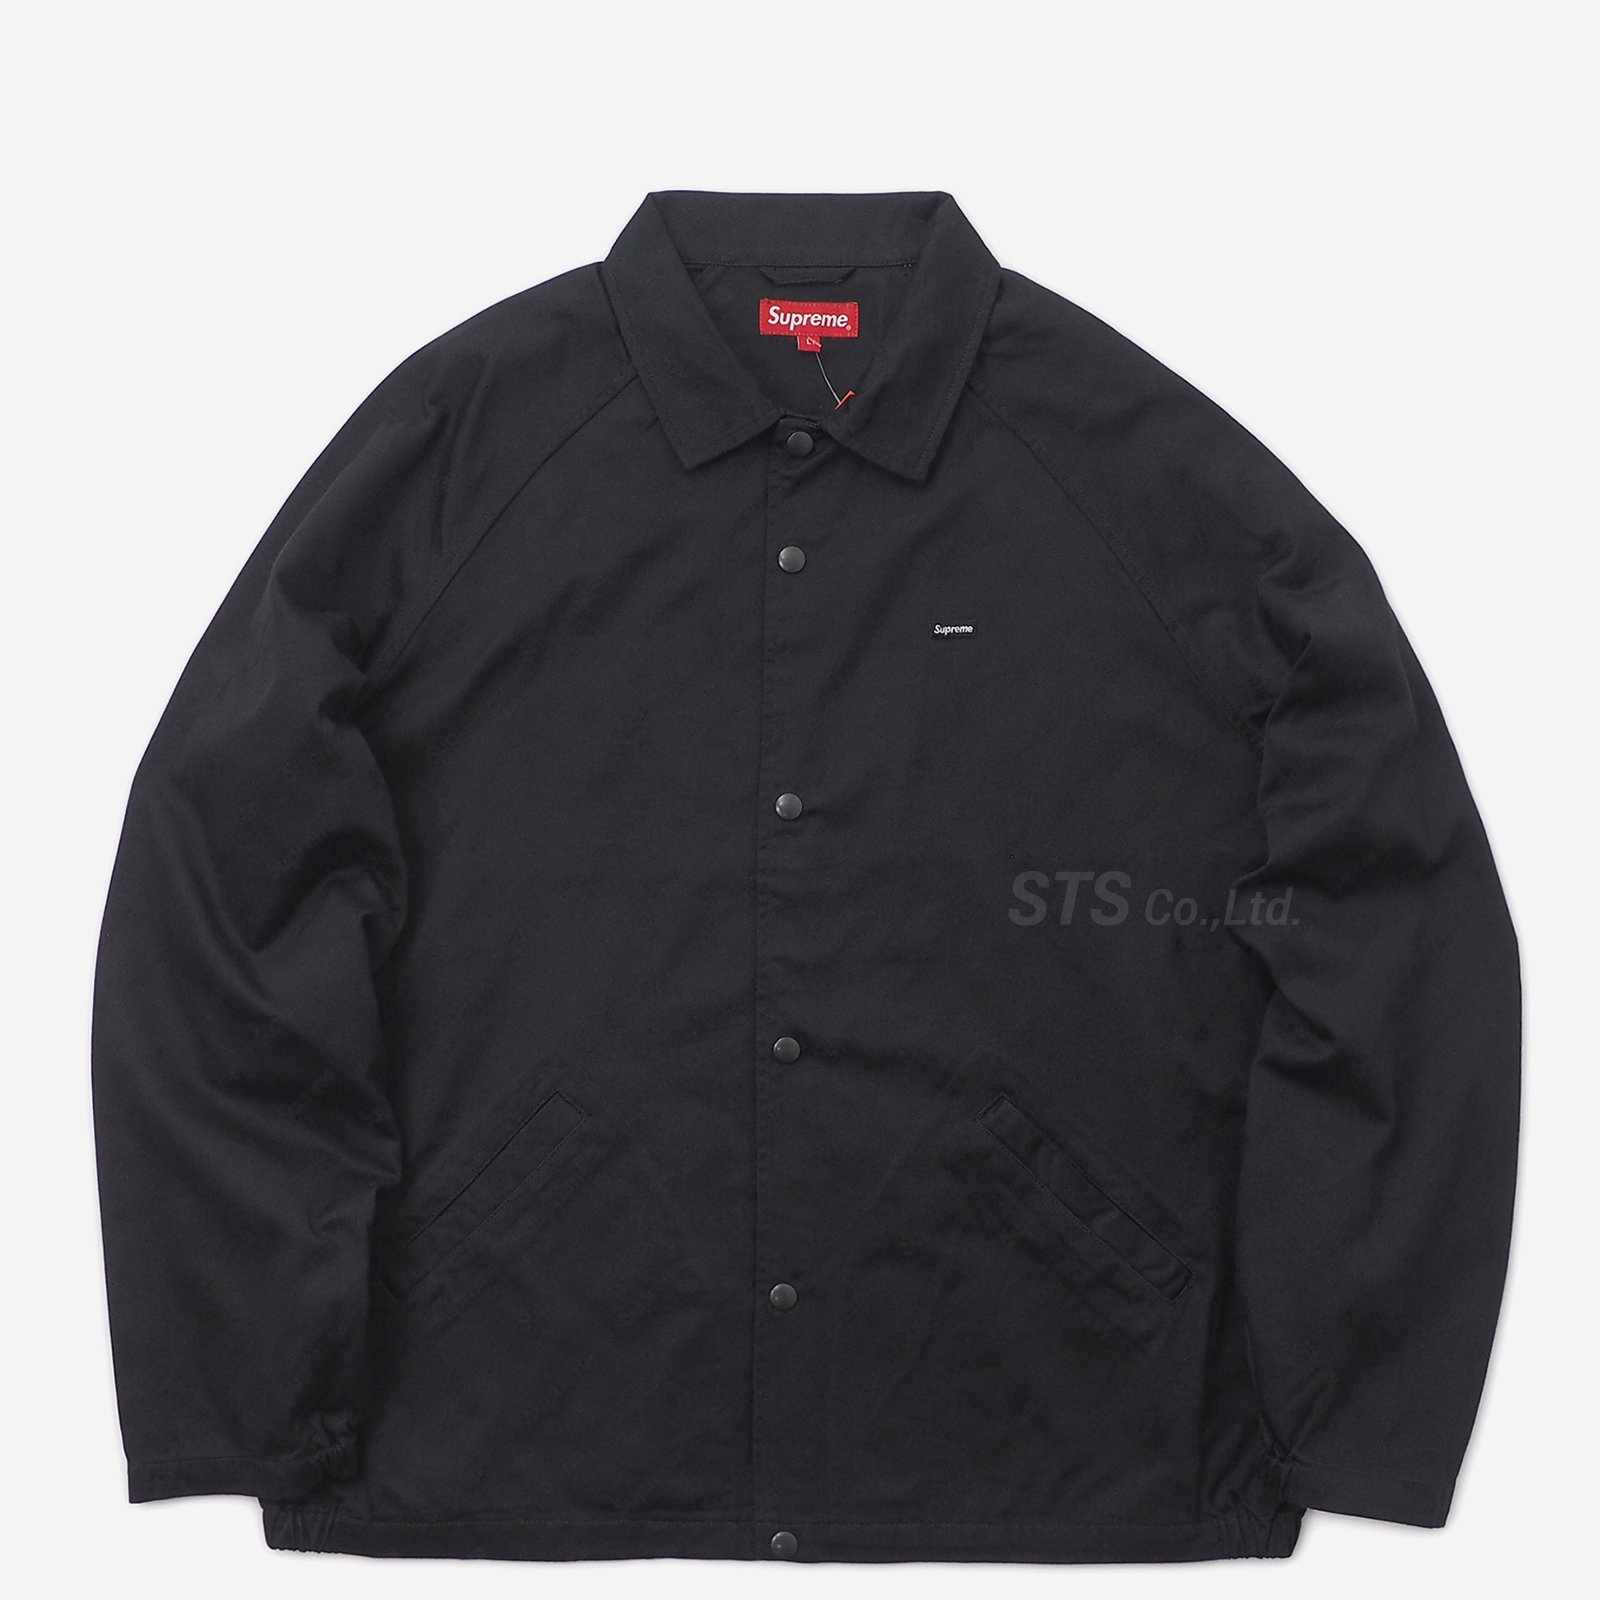 Gジャン/デニムジャケットsupreme snap front twill jacket